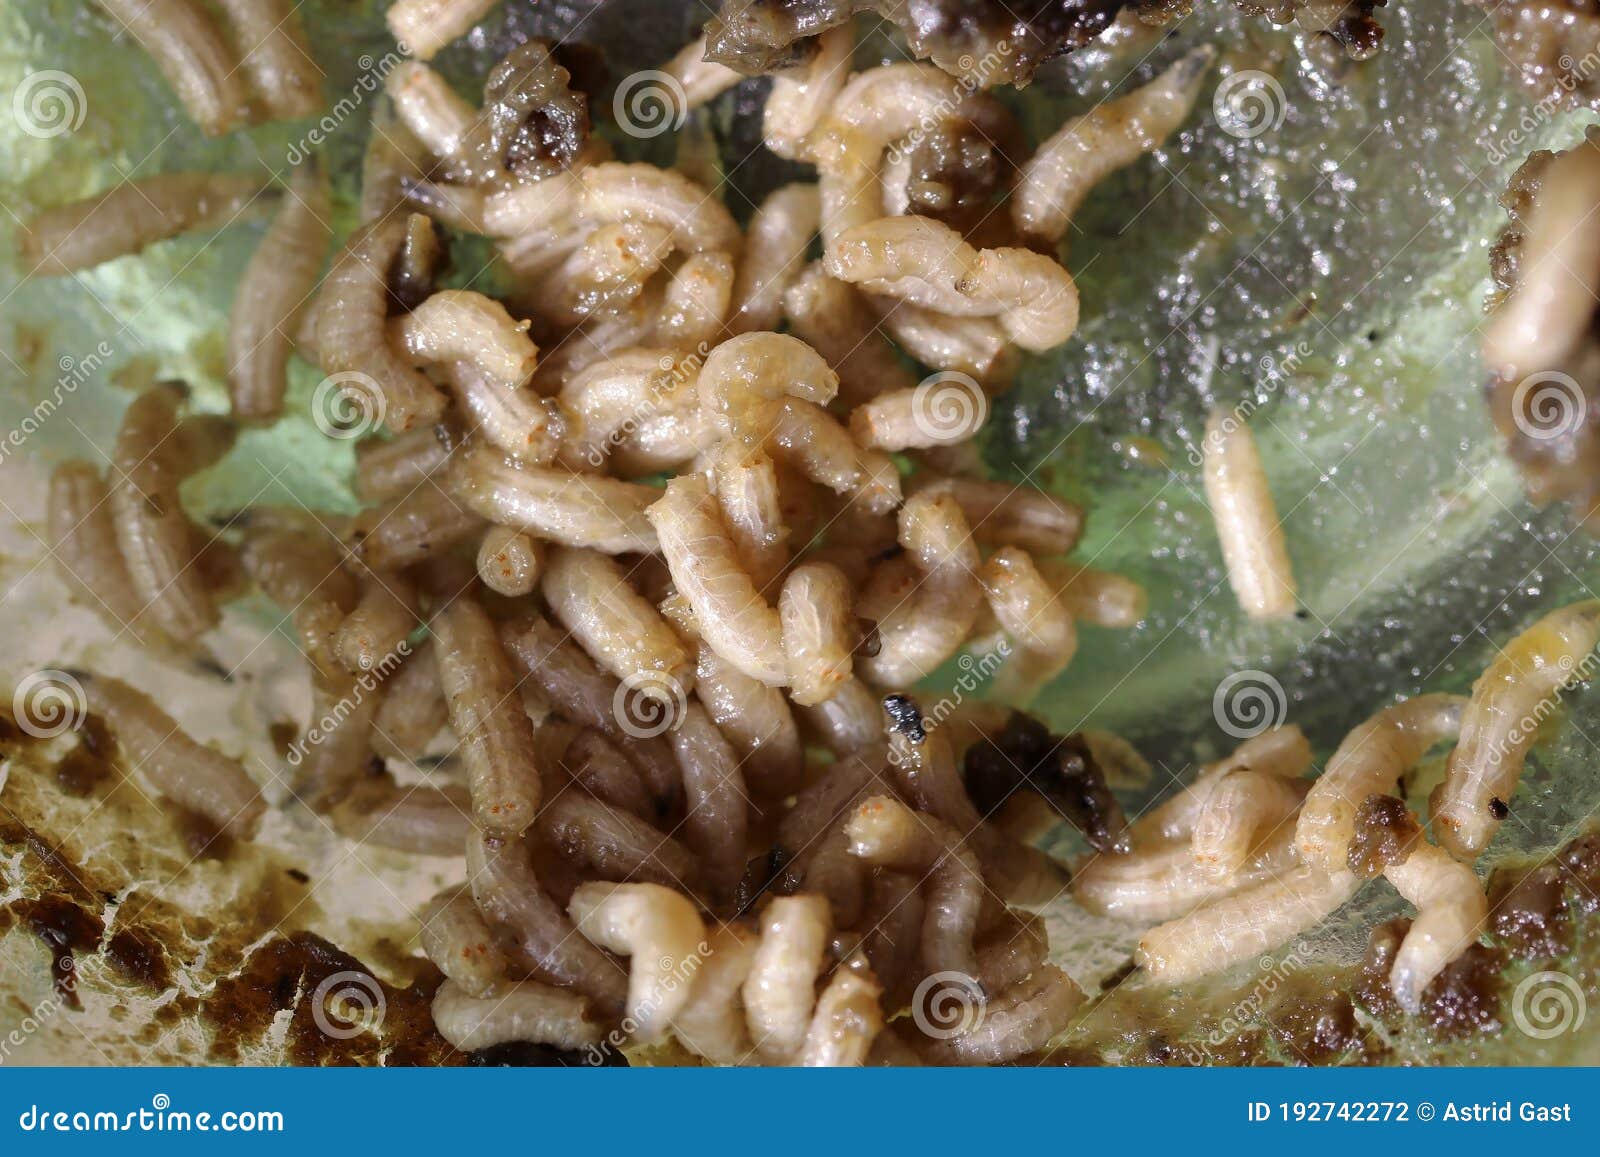 Fly maggots on food stock photo. Image of eating, brachycera - 192742272